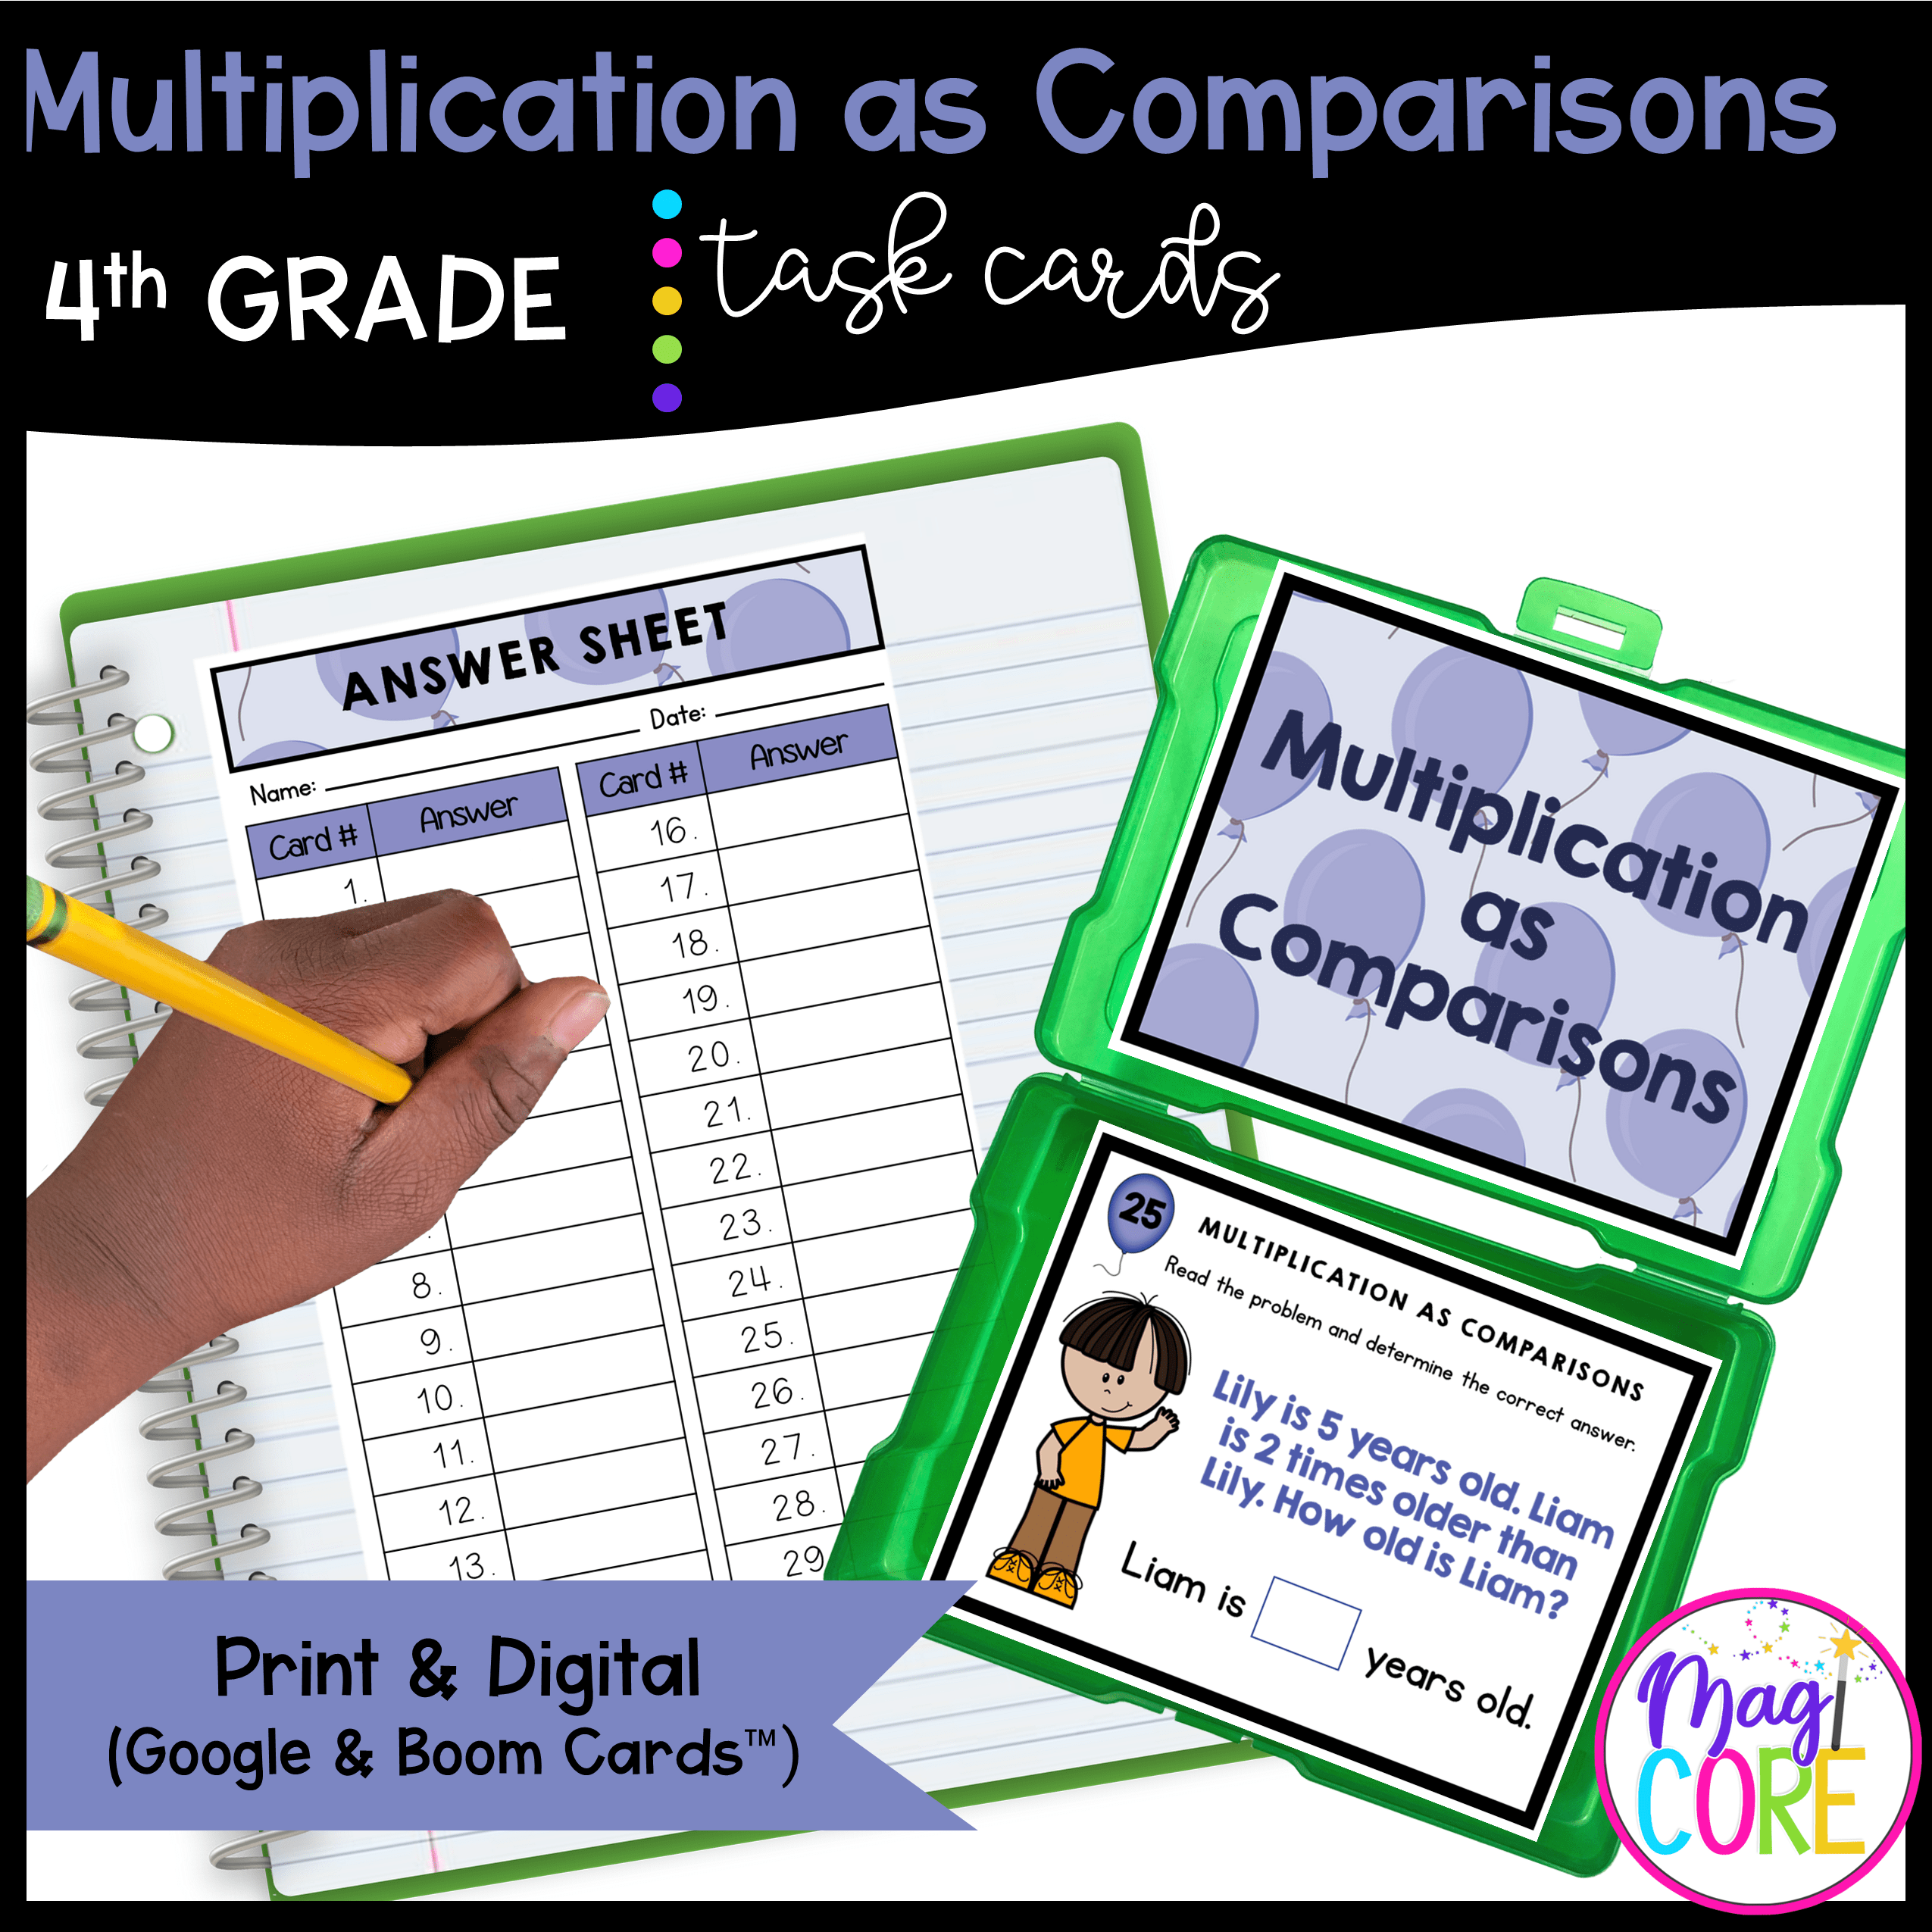 Multiplication as Comparisons - 4th Grade Task Cards - Print & Digital - 4.OA.1